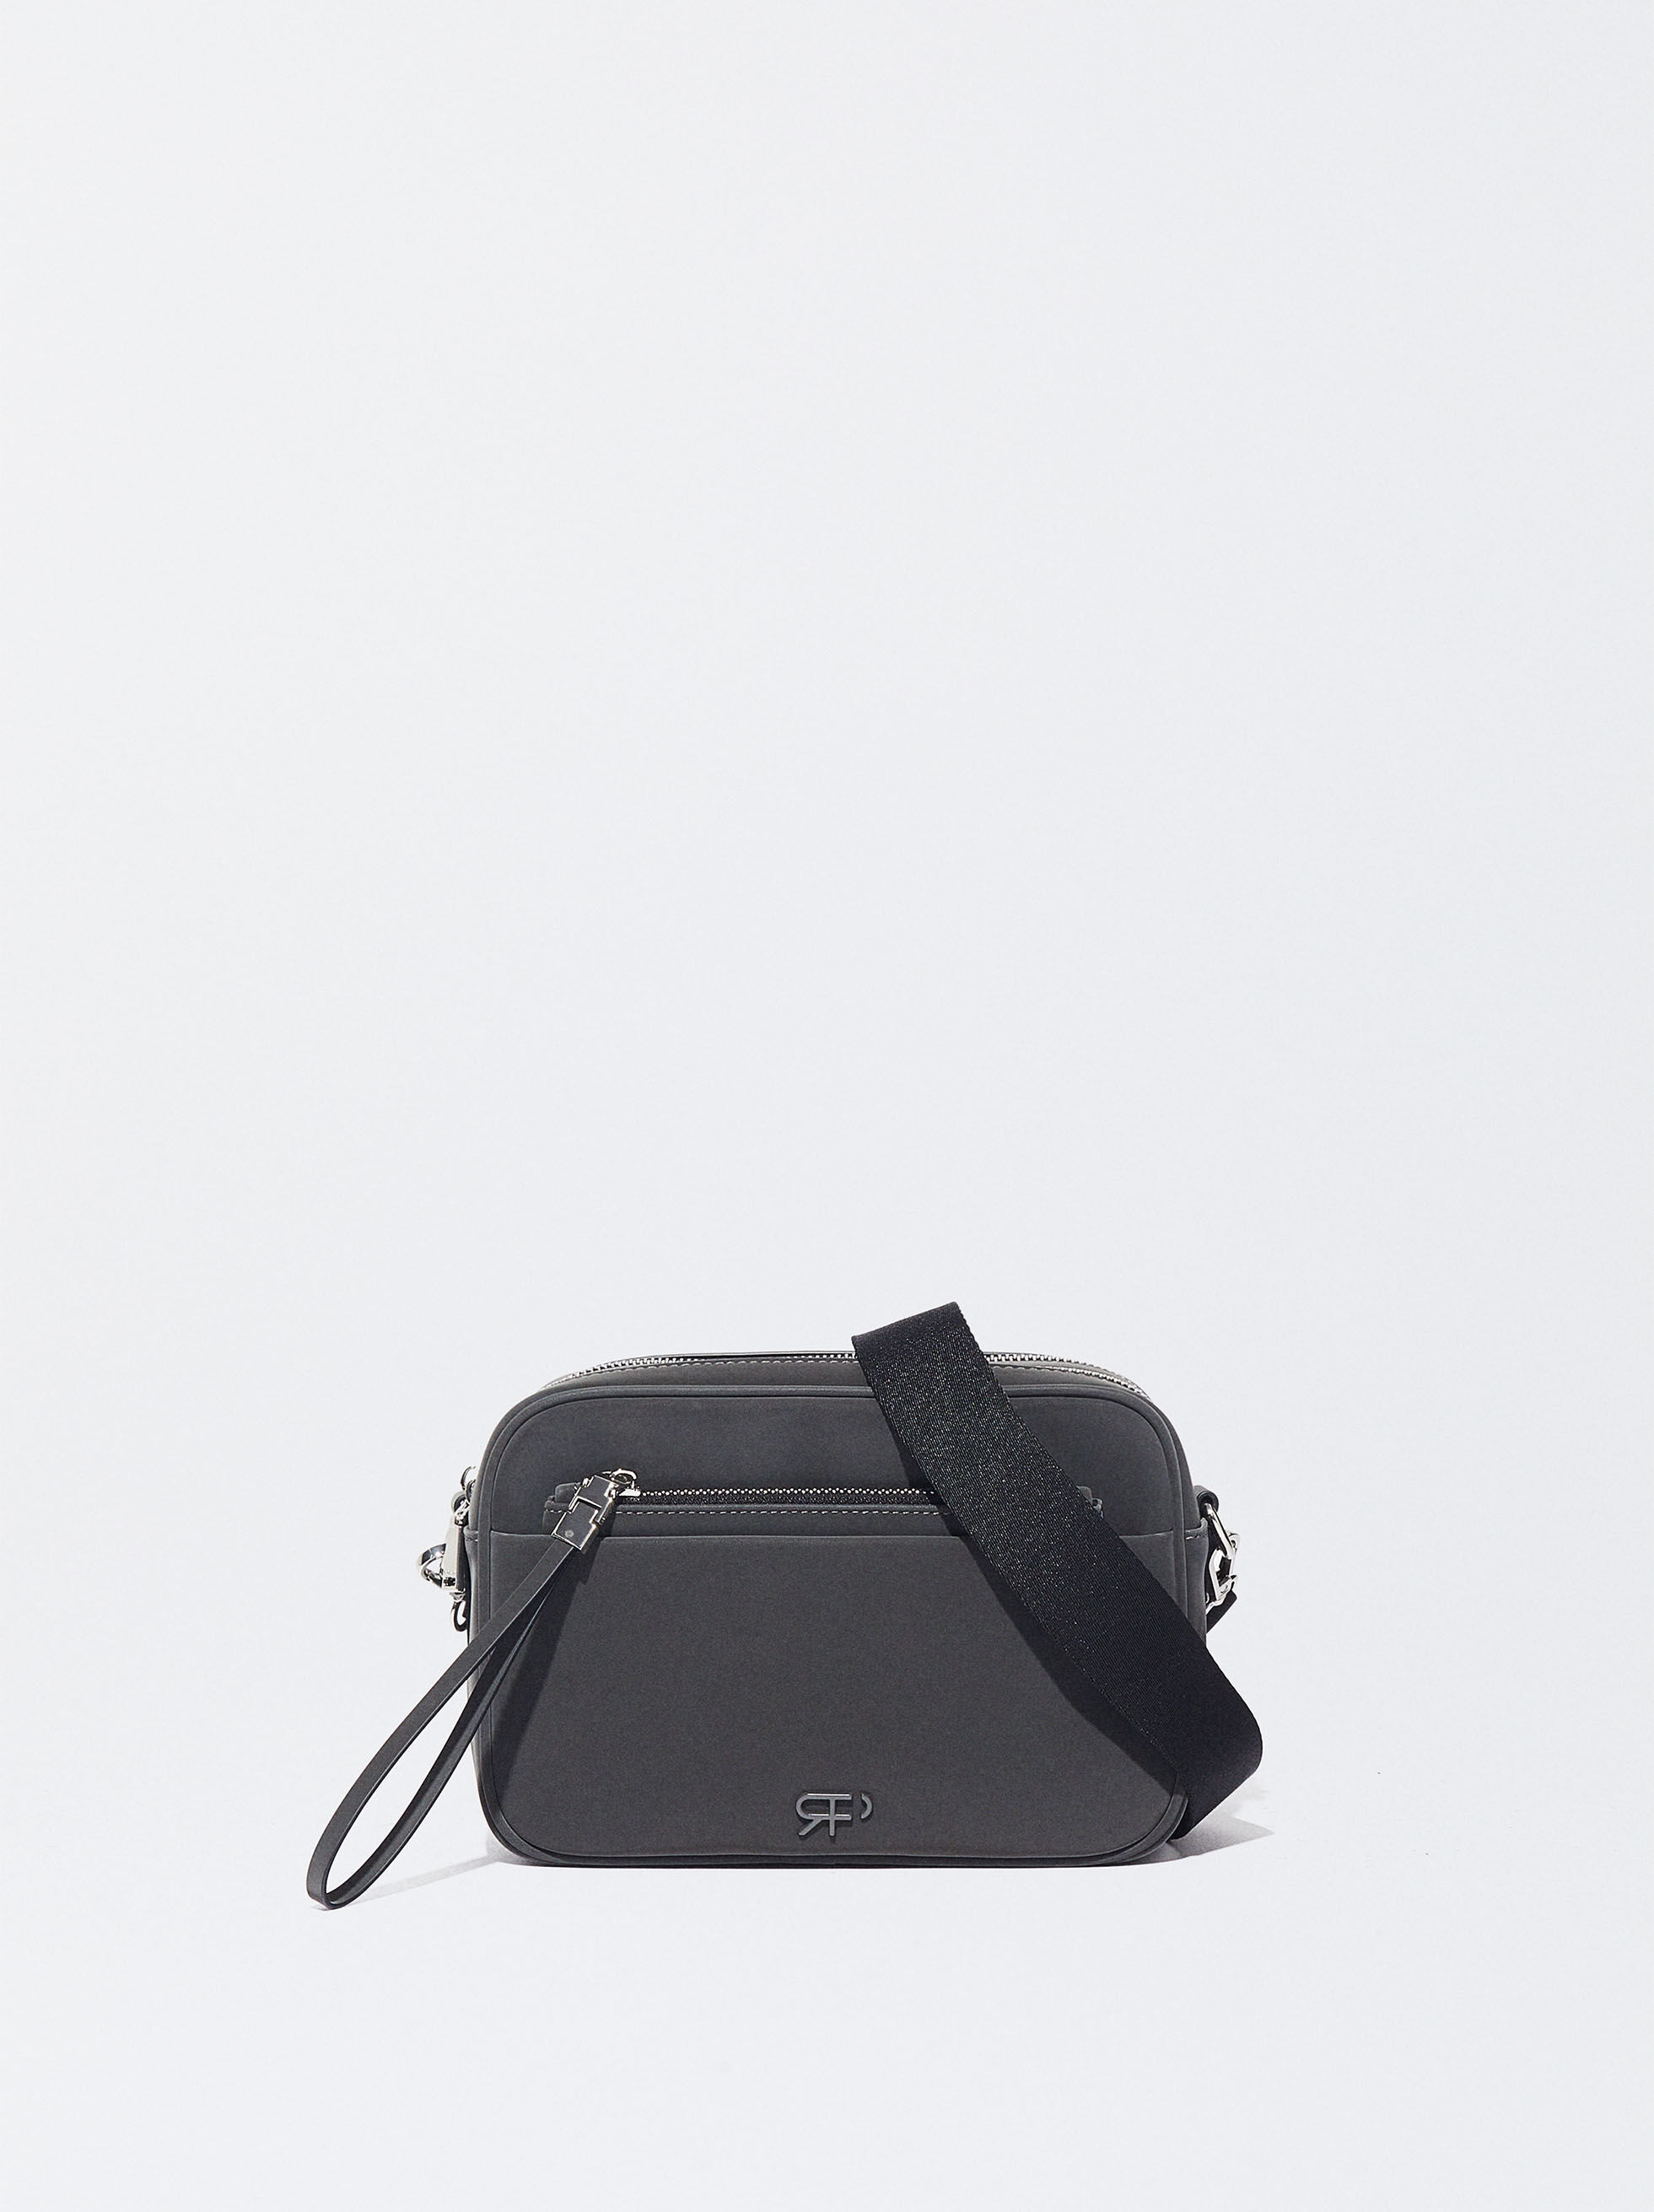 BLACK LEATHER HOBO Bag Oversize Shoulder Bag Everyday Leather Purse Soft  Leather Handbag for Women - Etsy | Lederen schoudertas, Hobo tas,  Schoudertas